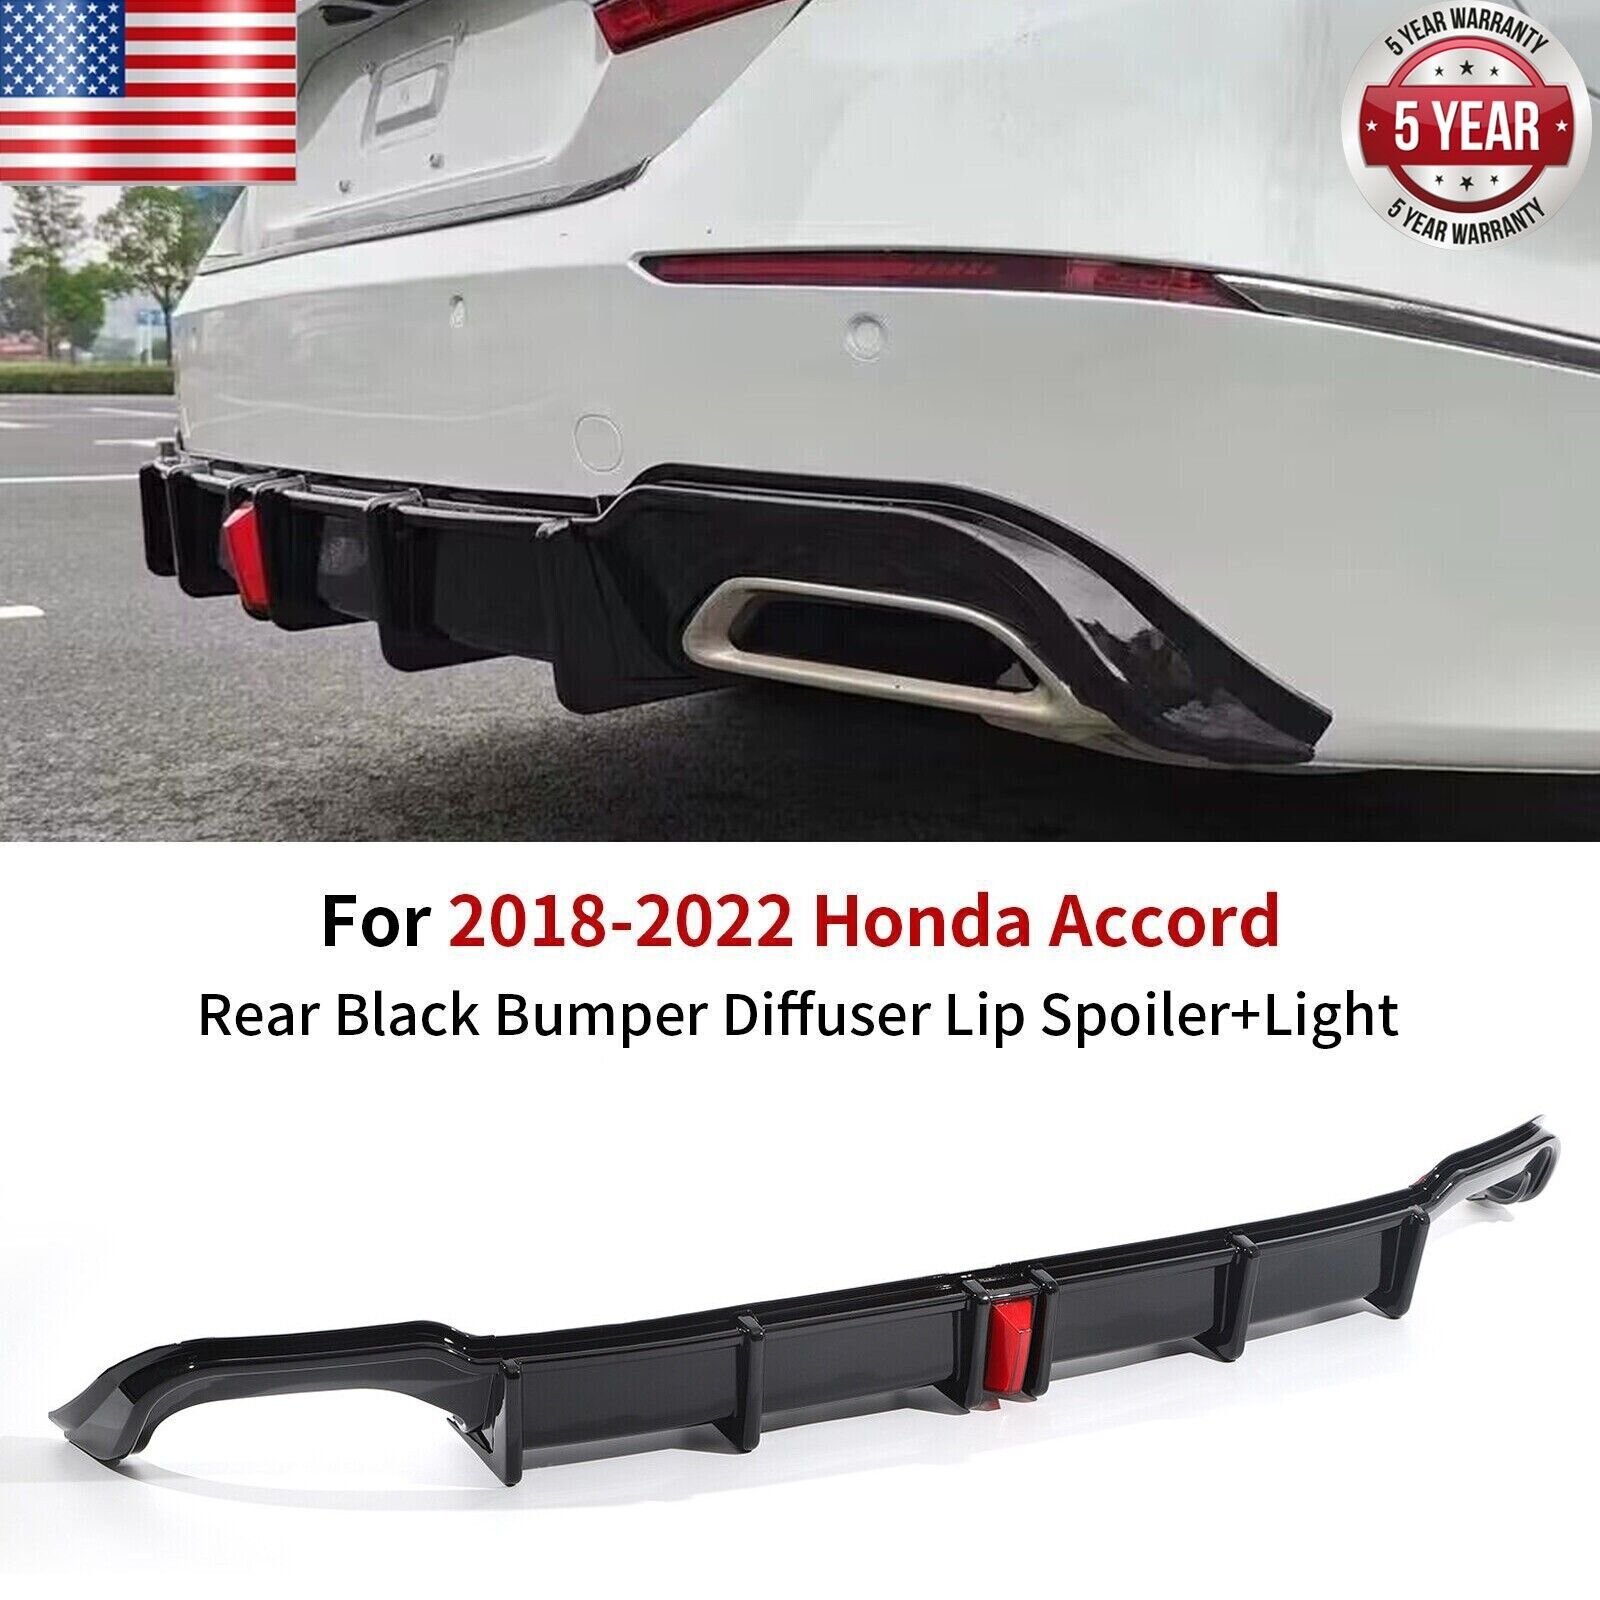 For 2018-2022 Honda Accord Sedan 4-Door Rear Bumper Diffuser Lip Spoiler + Light